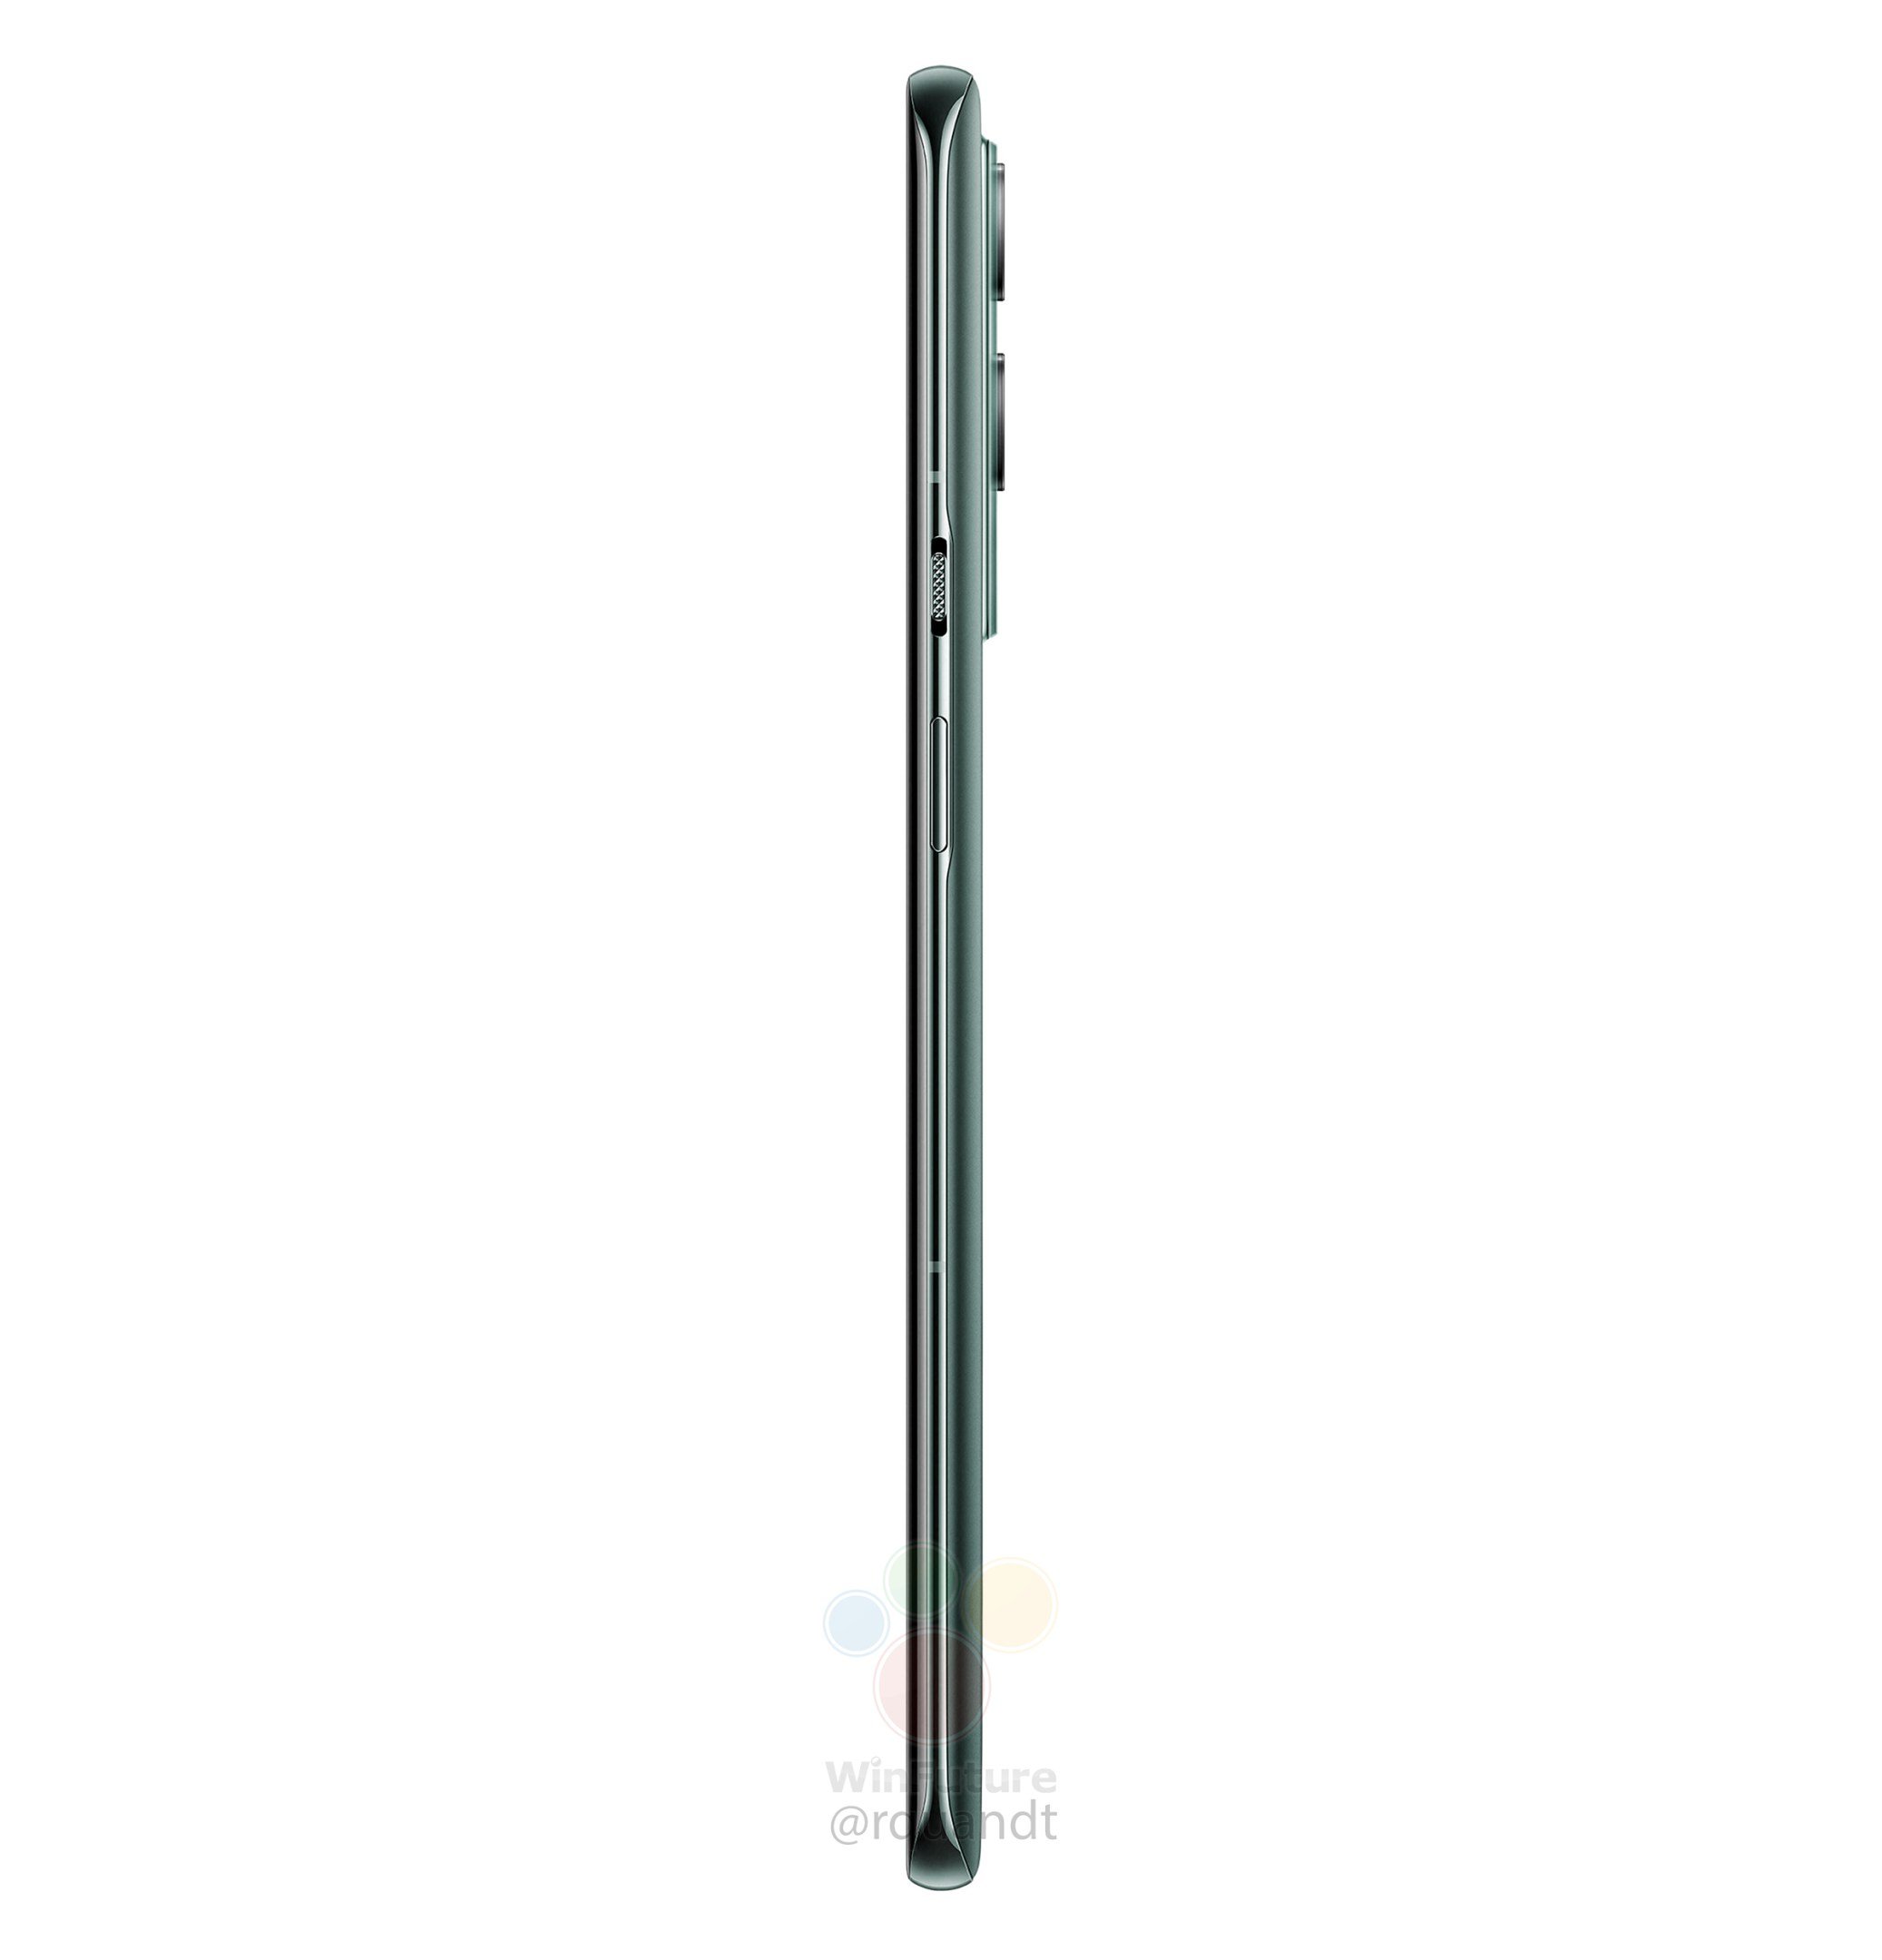 OnePlus-9-Pro-1615403684-0-0.jpg